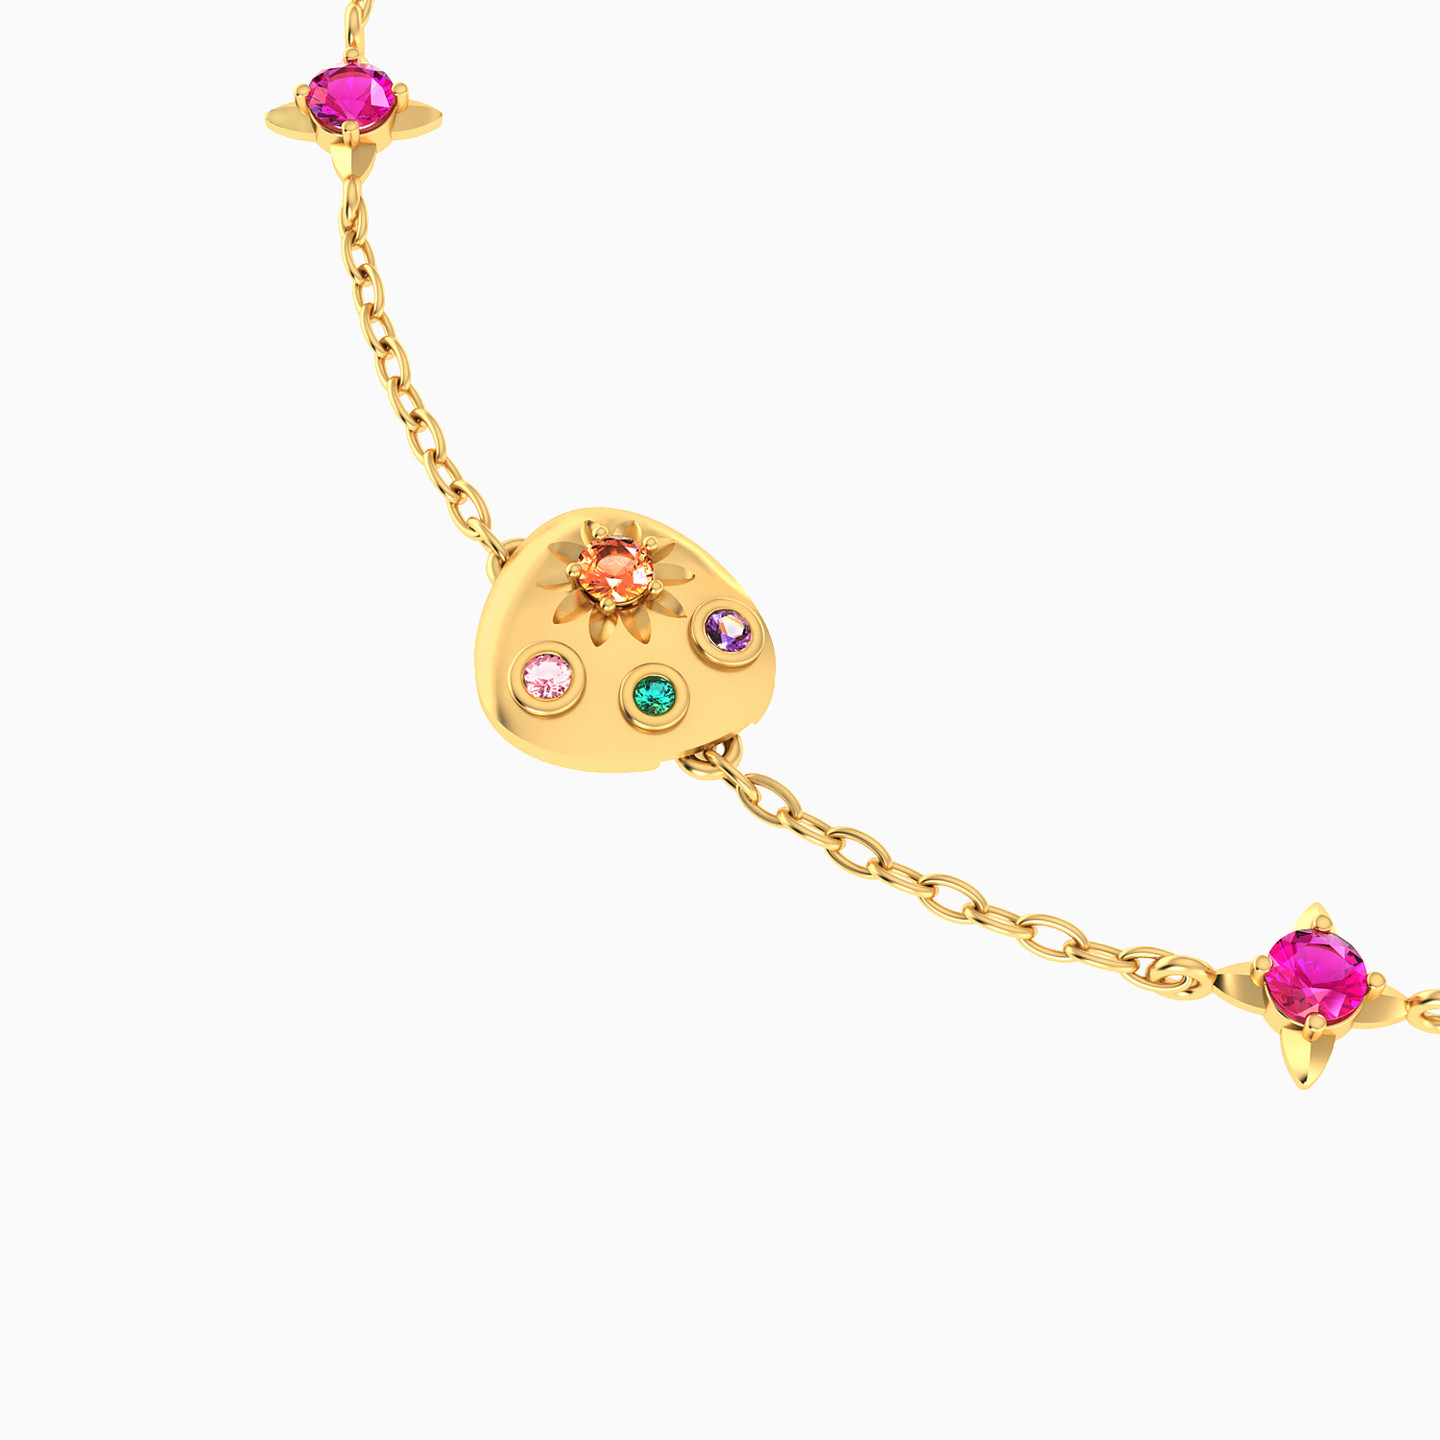 18K Gold Colored Stones Chain Bracelet - 3